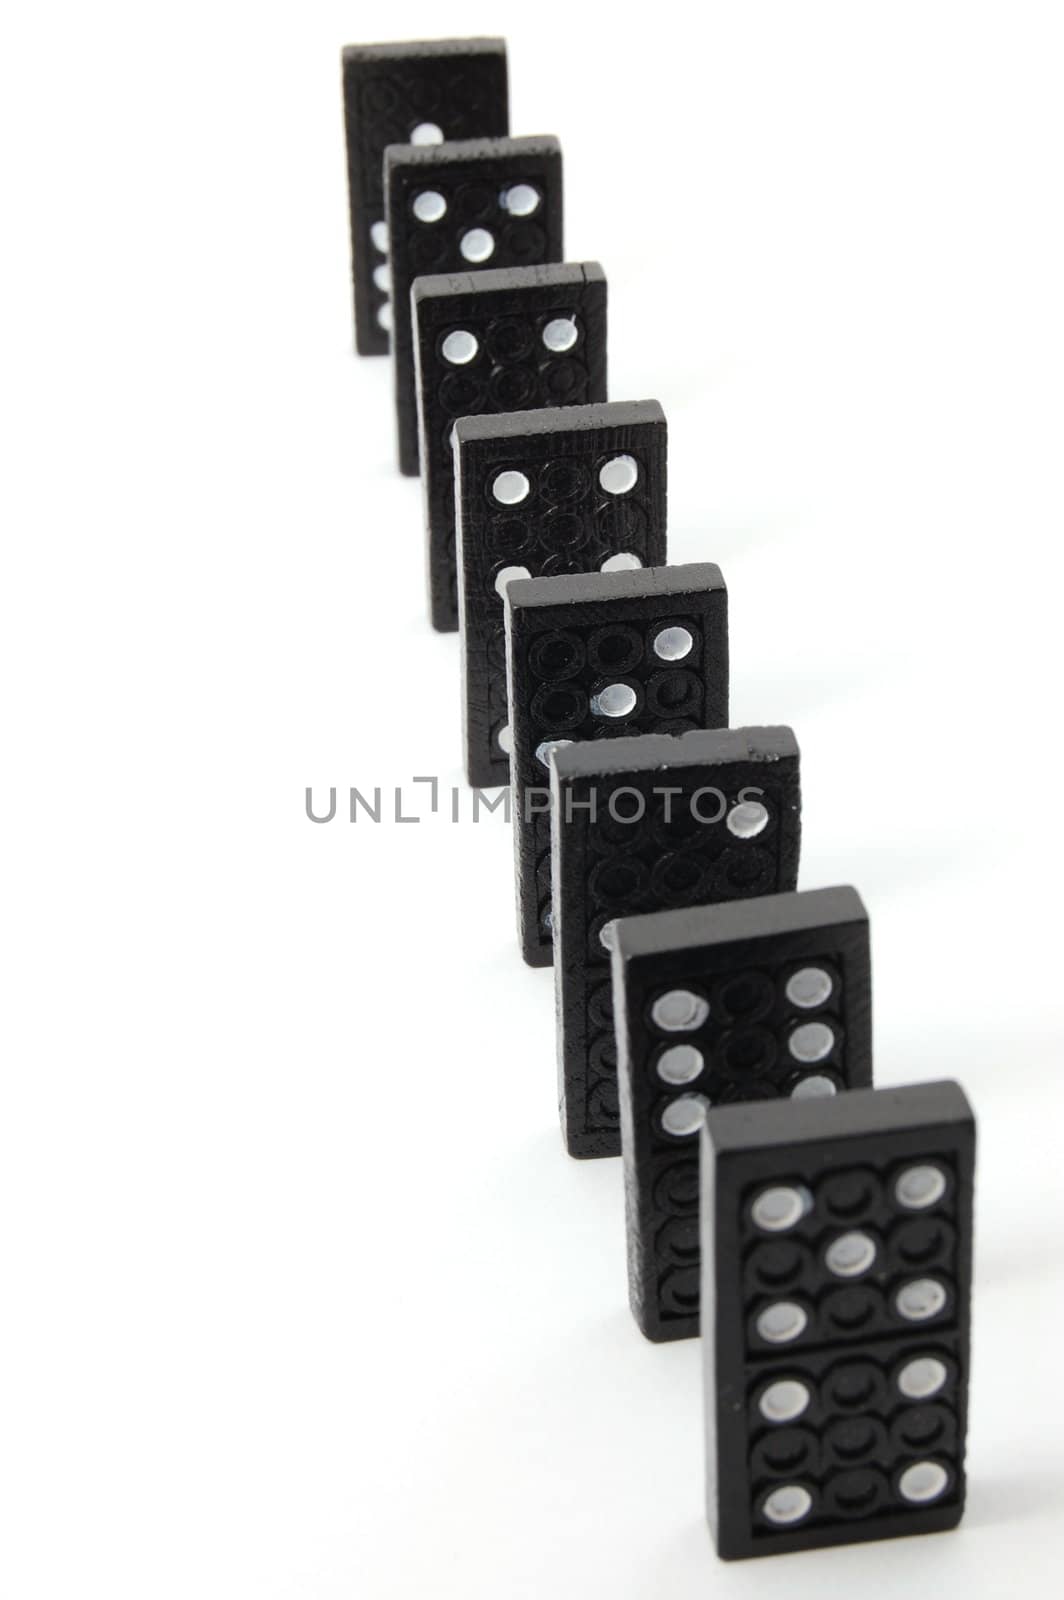 domino by gunnar3000